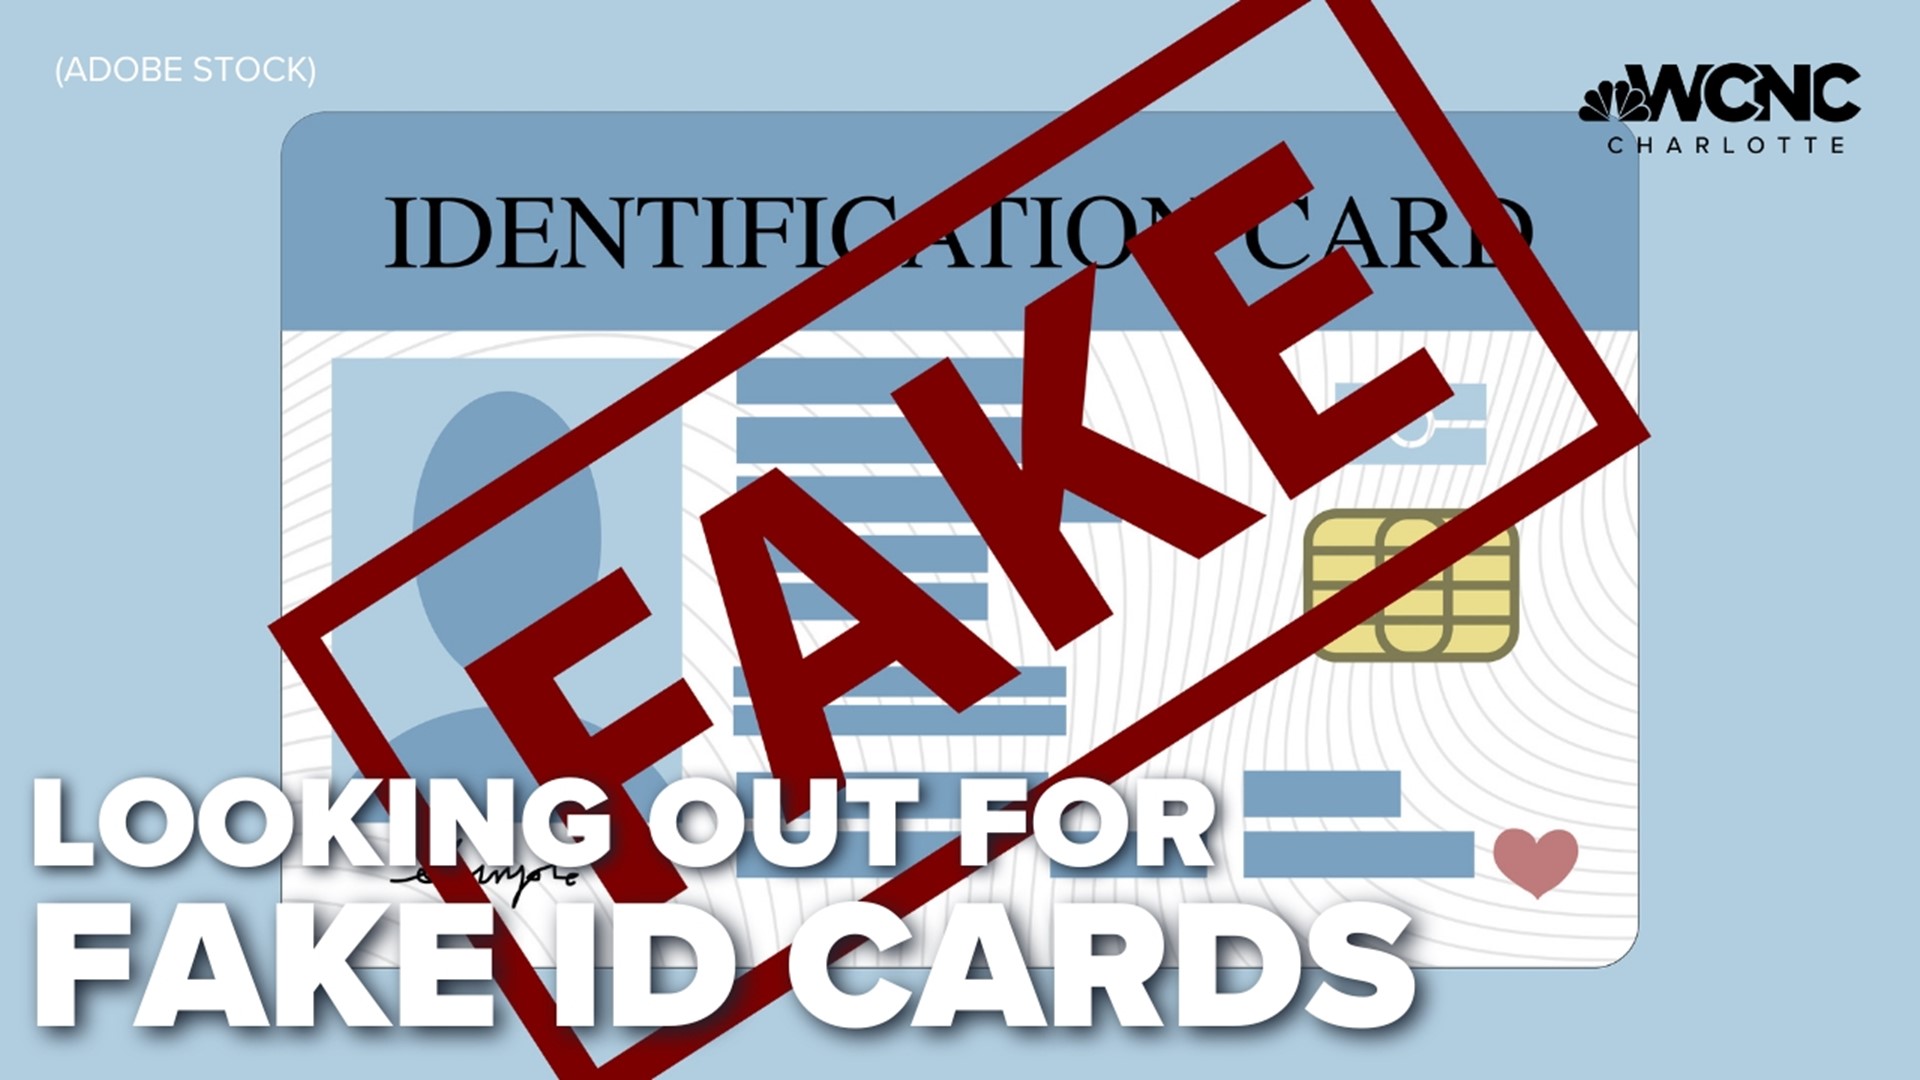 getting a fake id